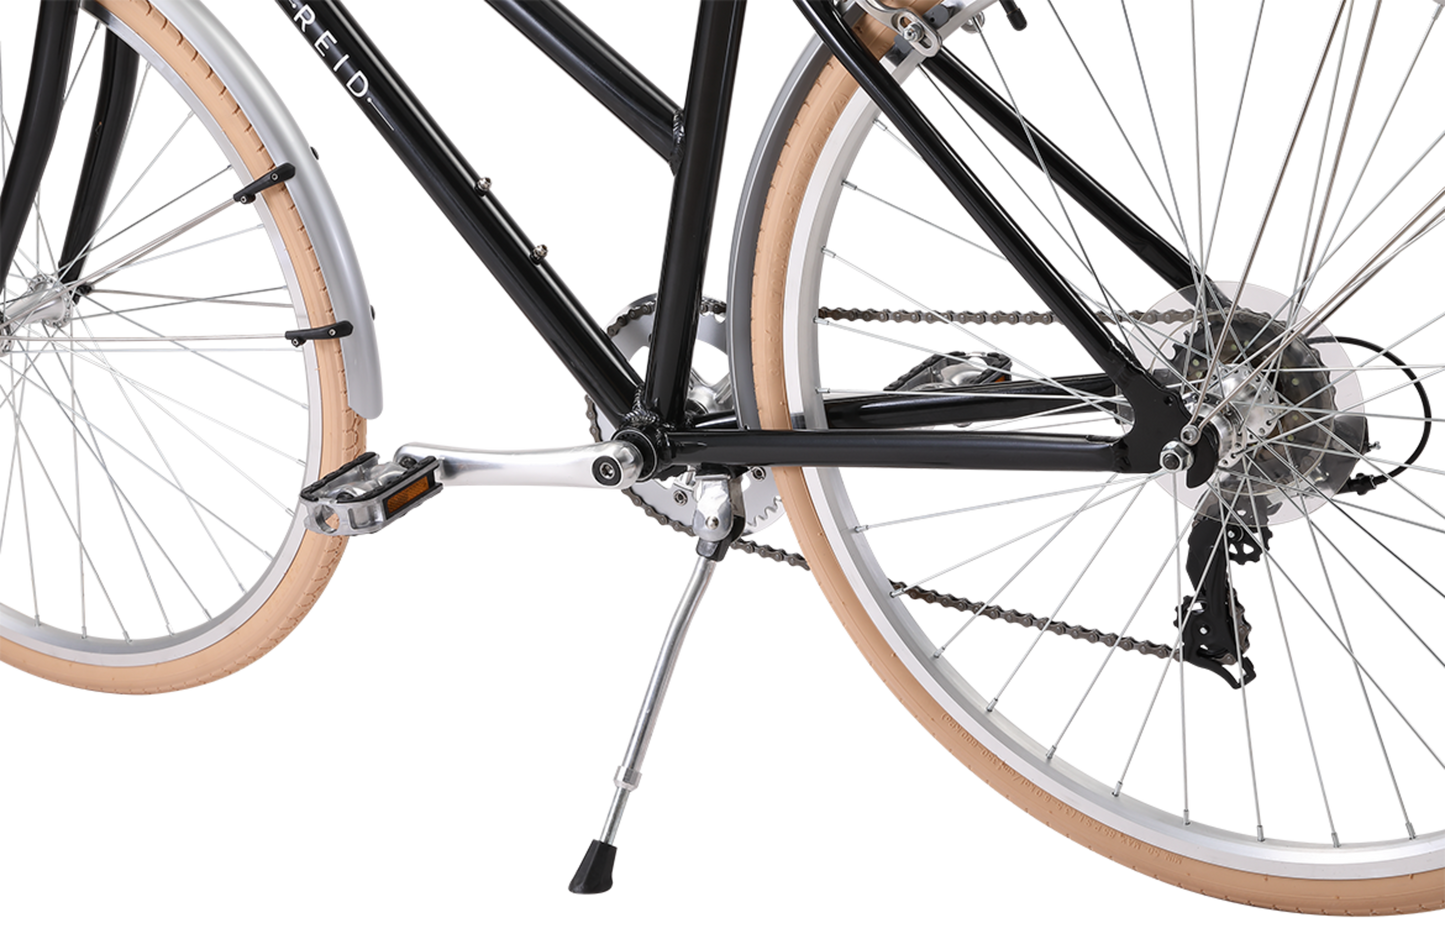 Ladies Esprit Superlite Vintage Bike in Metallic Black featuring alloy kickstand from Reid Cycles Australia